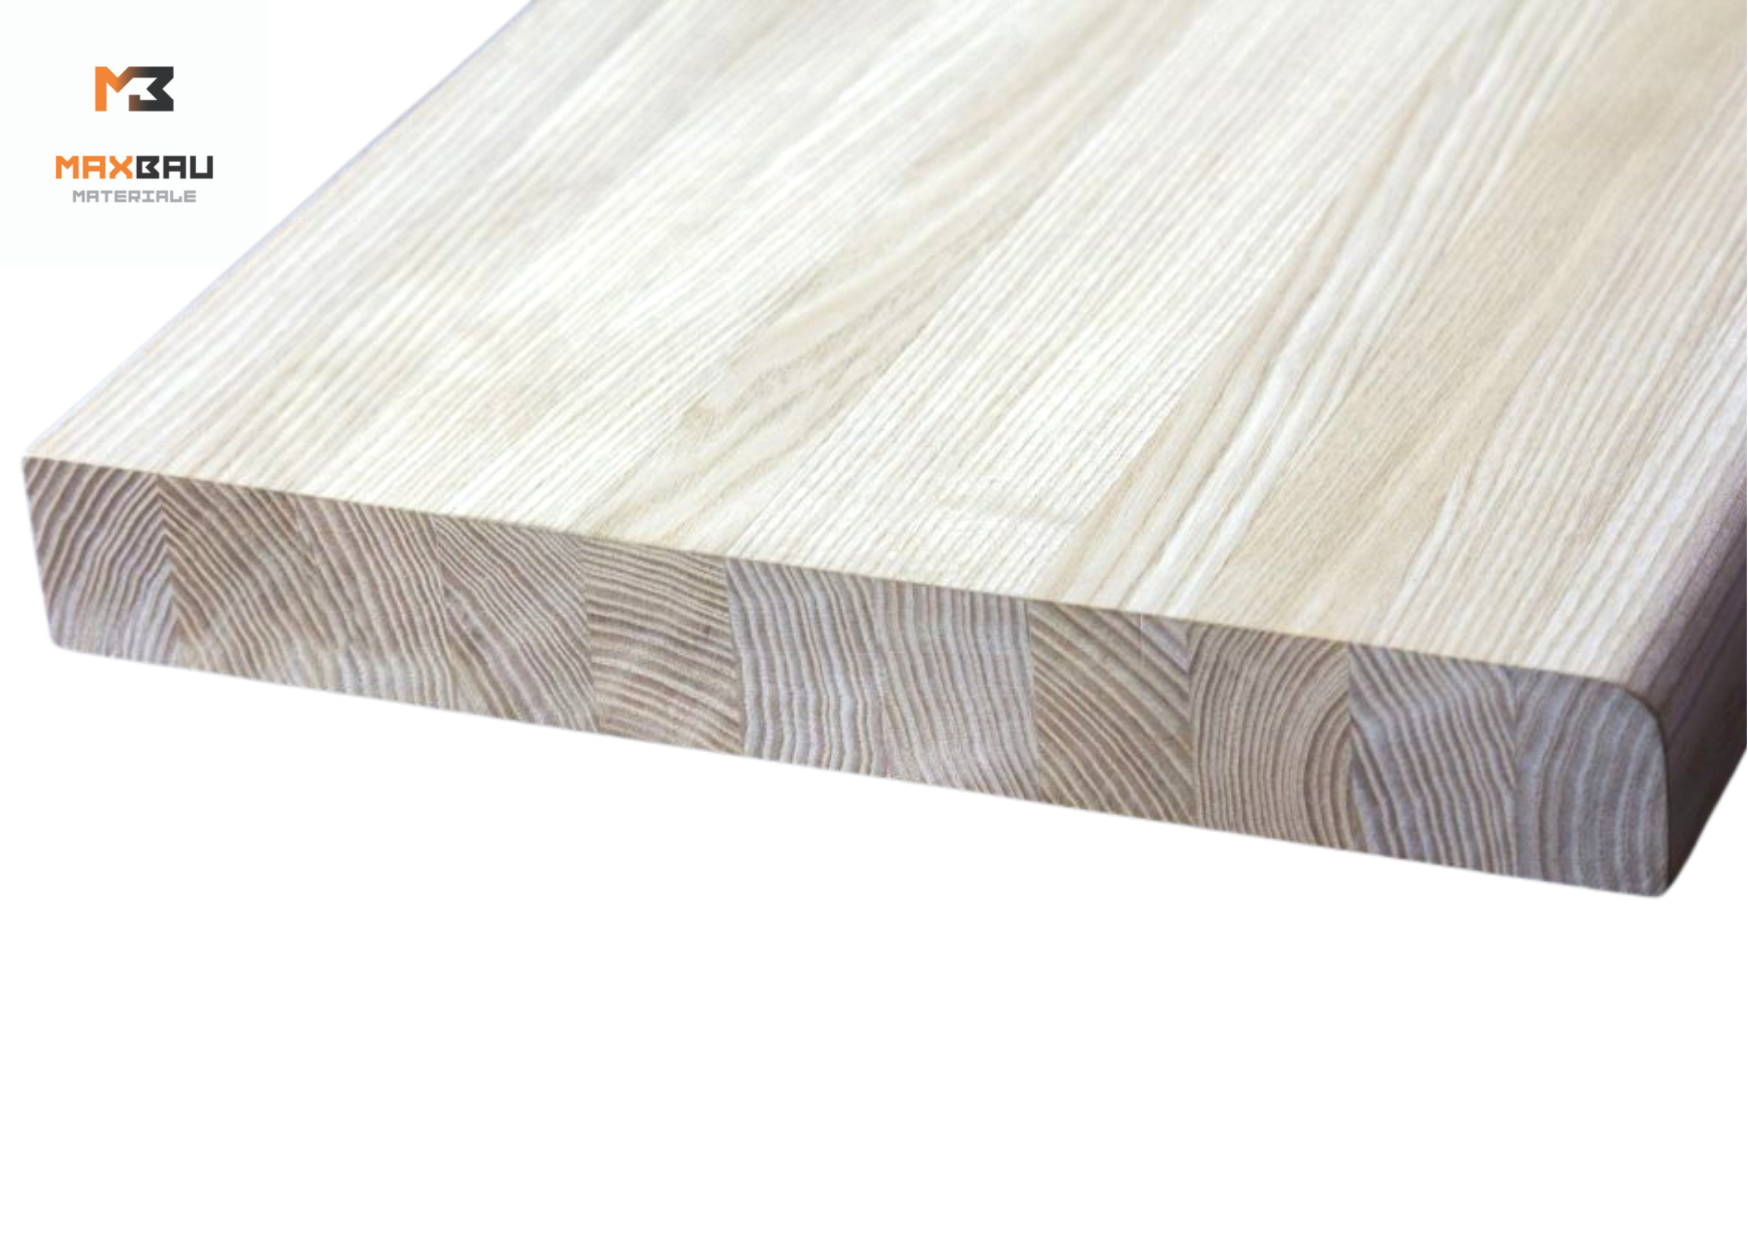 Placi din lemn incleiat - Placa de lemn incleiat MaxBau 2000 x 600 x 28 mm Clasa AB, maxbau.ro